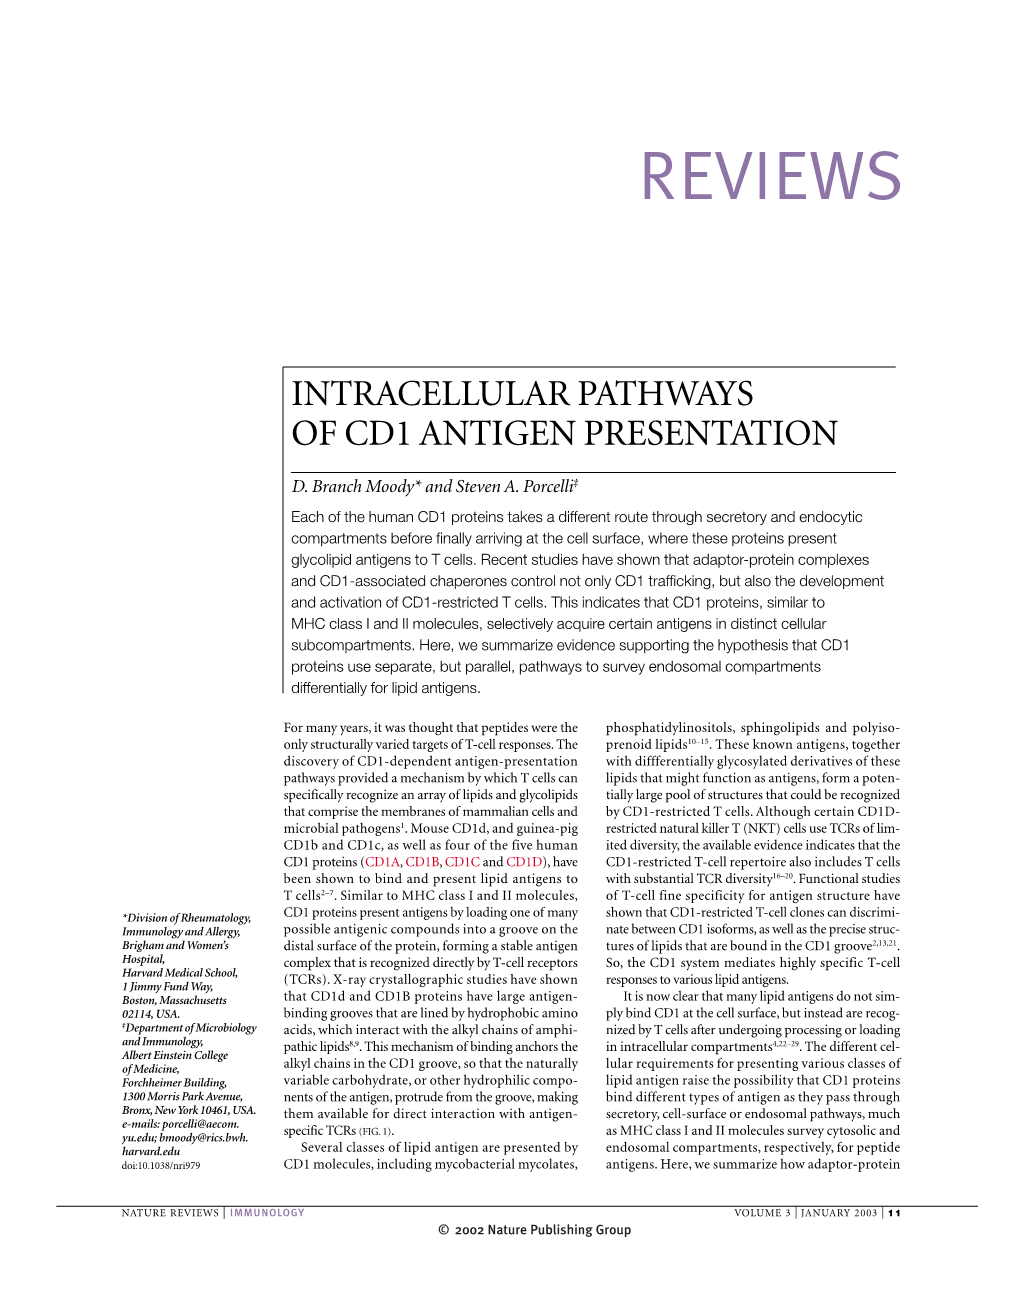 Intracellular Pathways of Cd1 Antigen Presentation